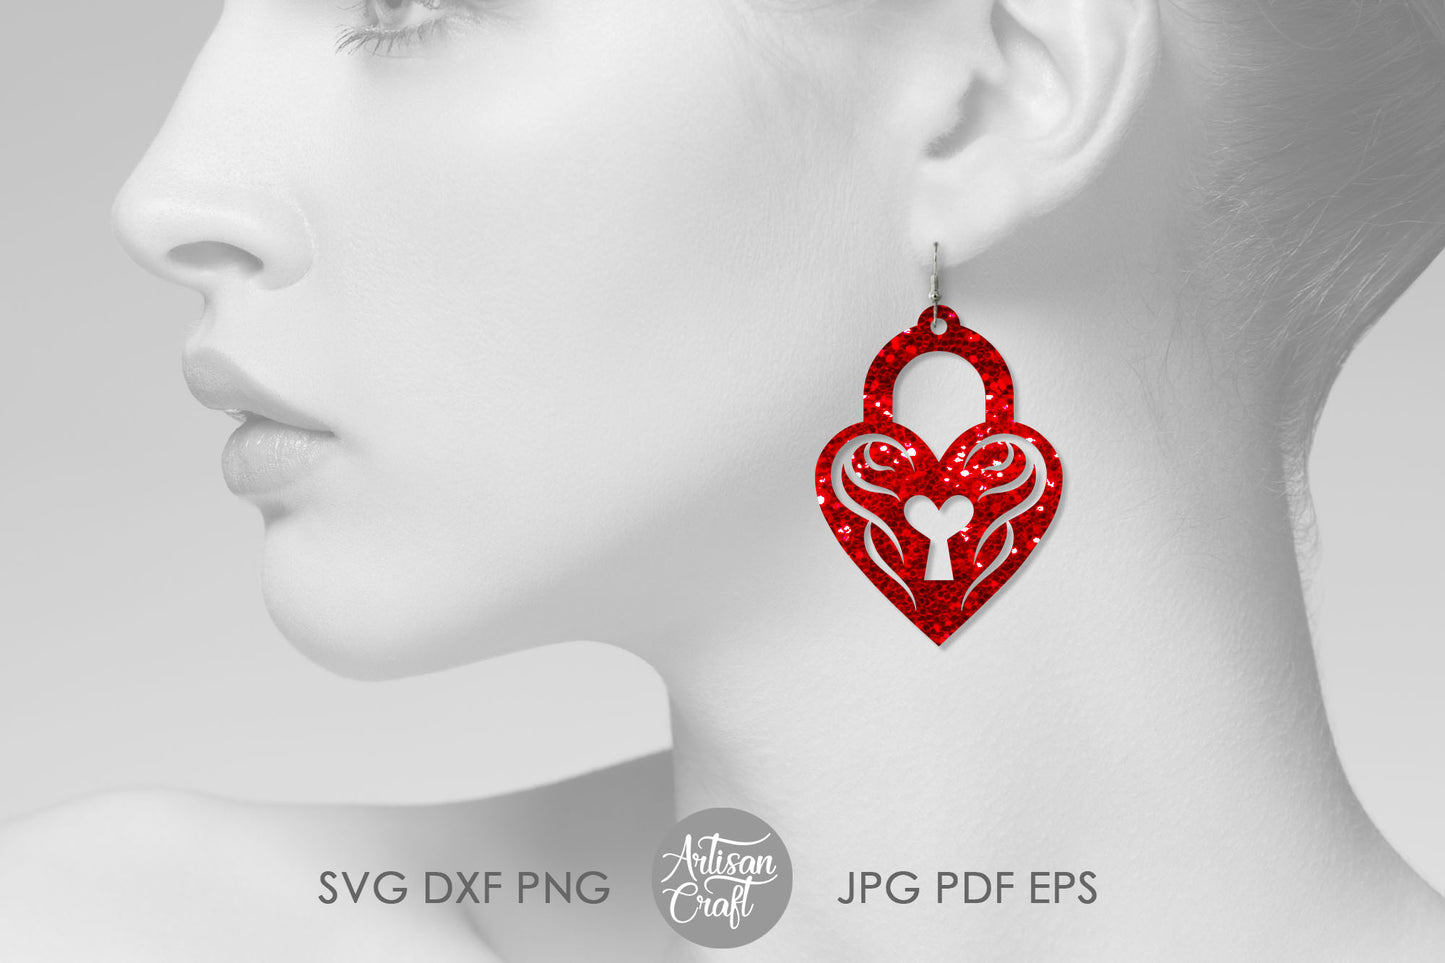 Heart lock and key Earrings SVG